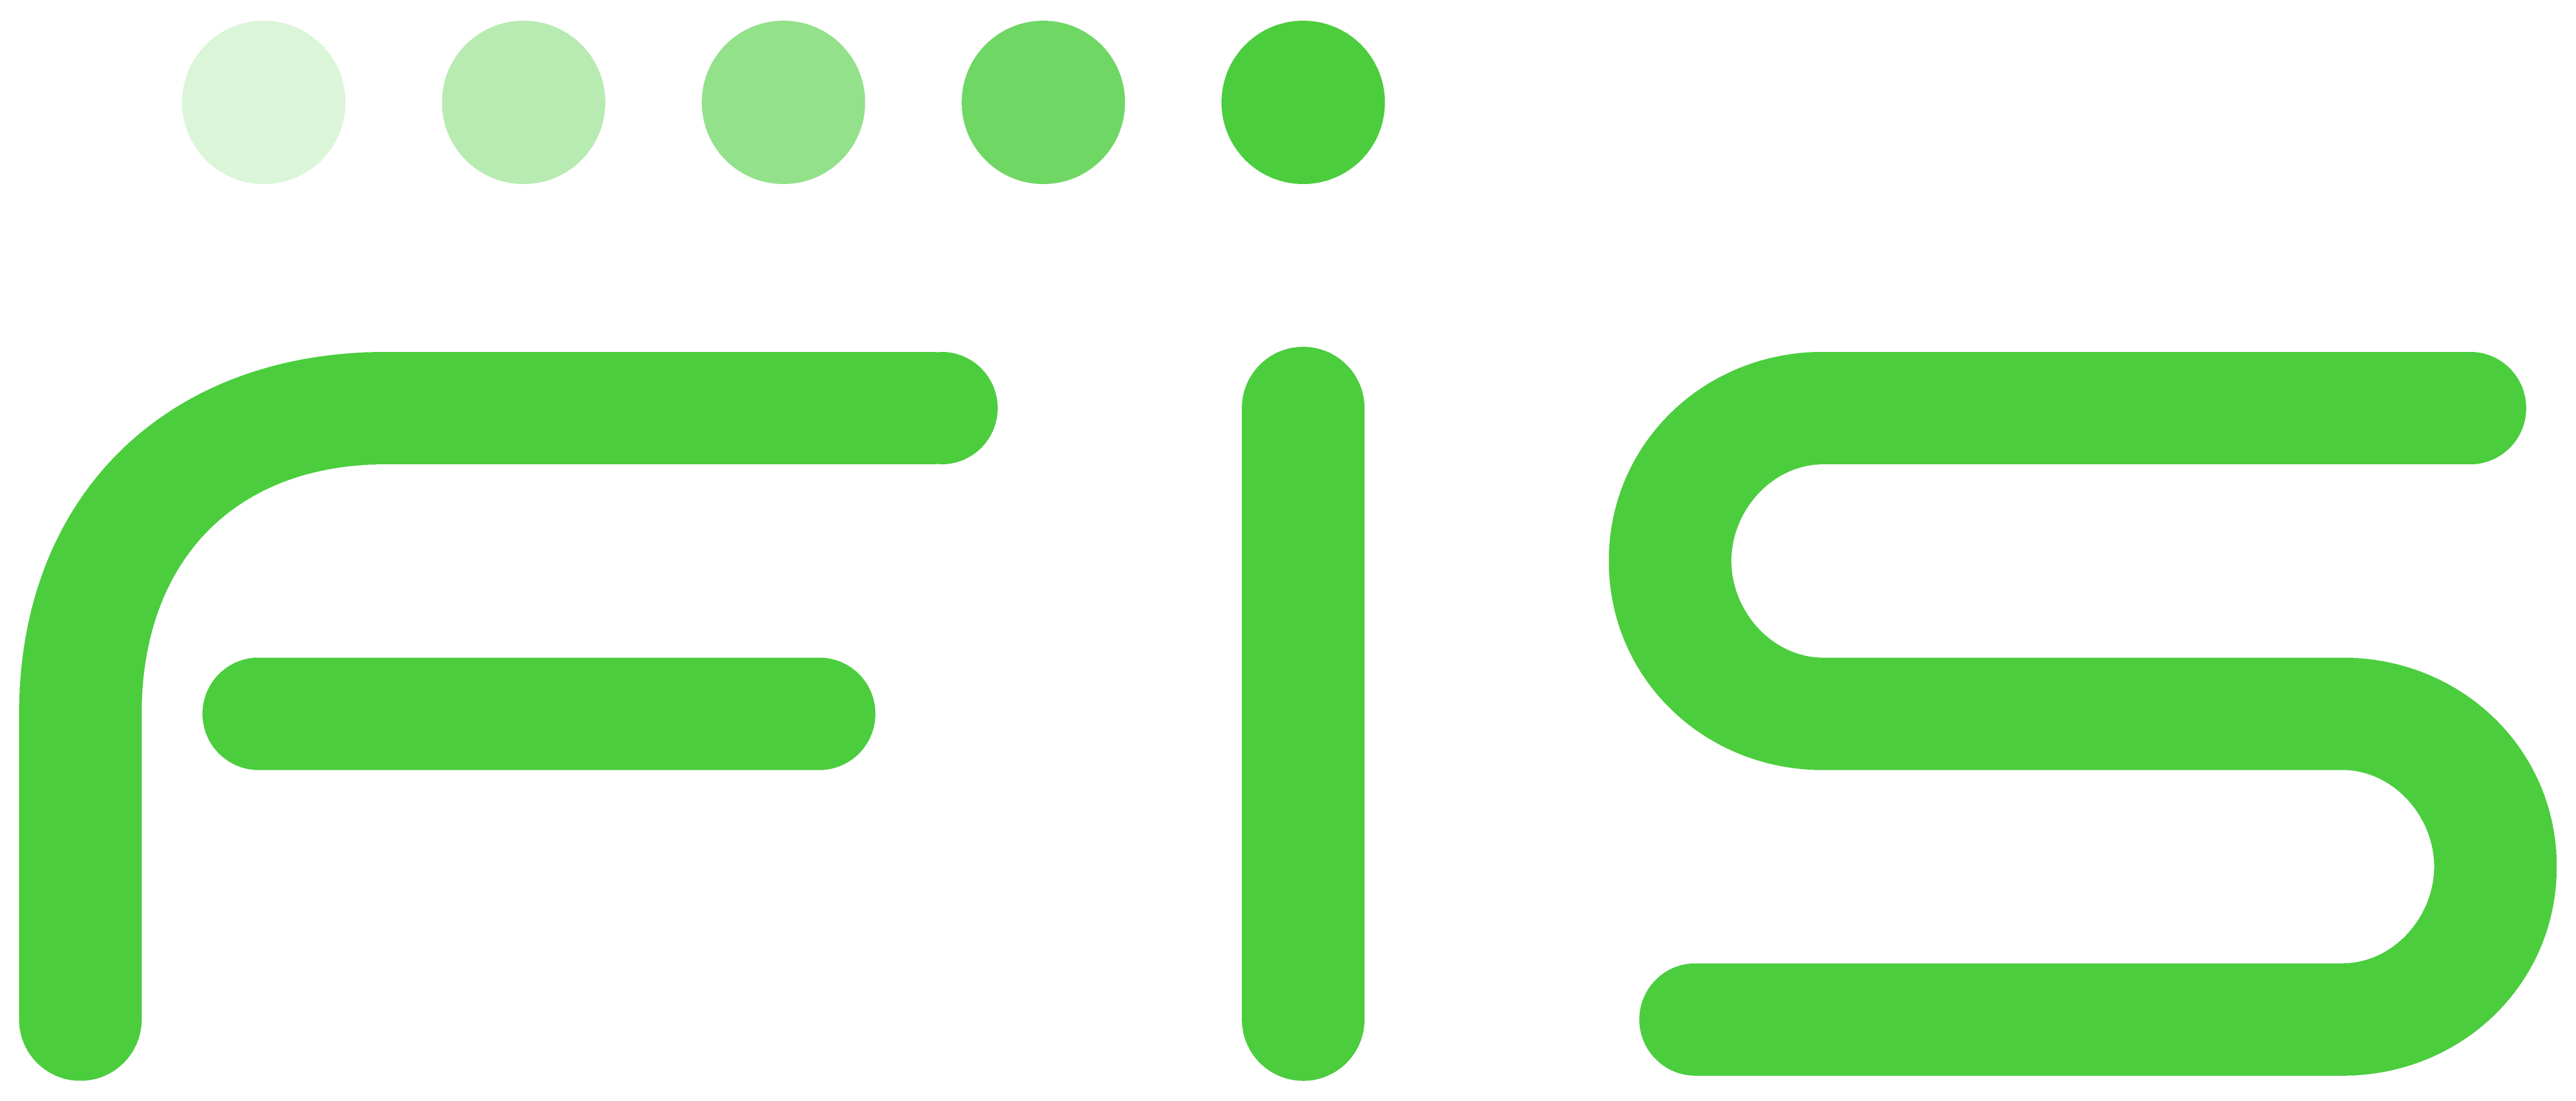 FIS logo colors